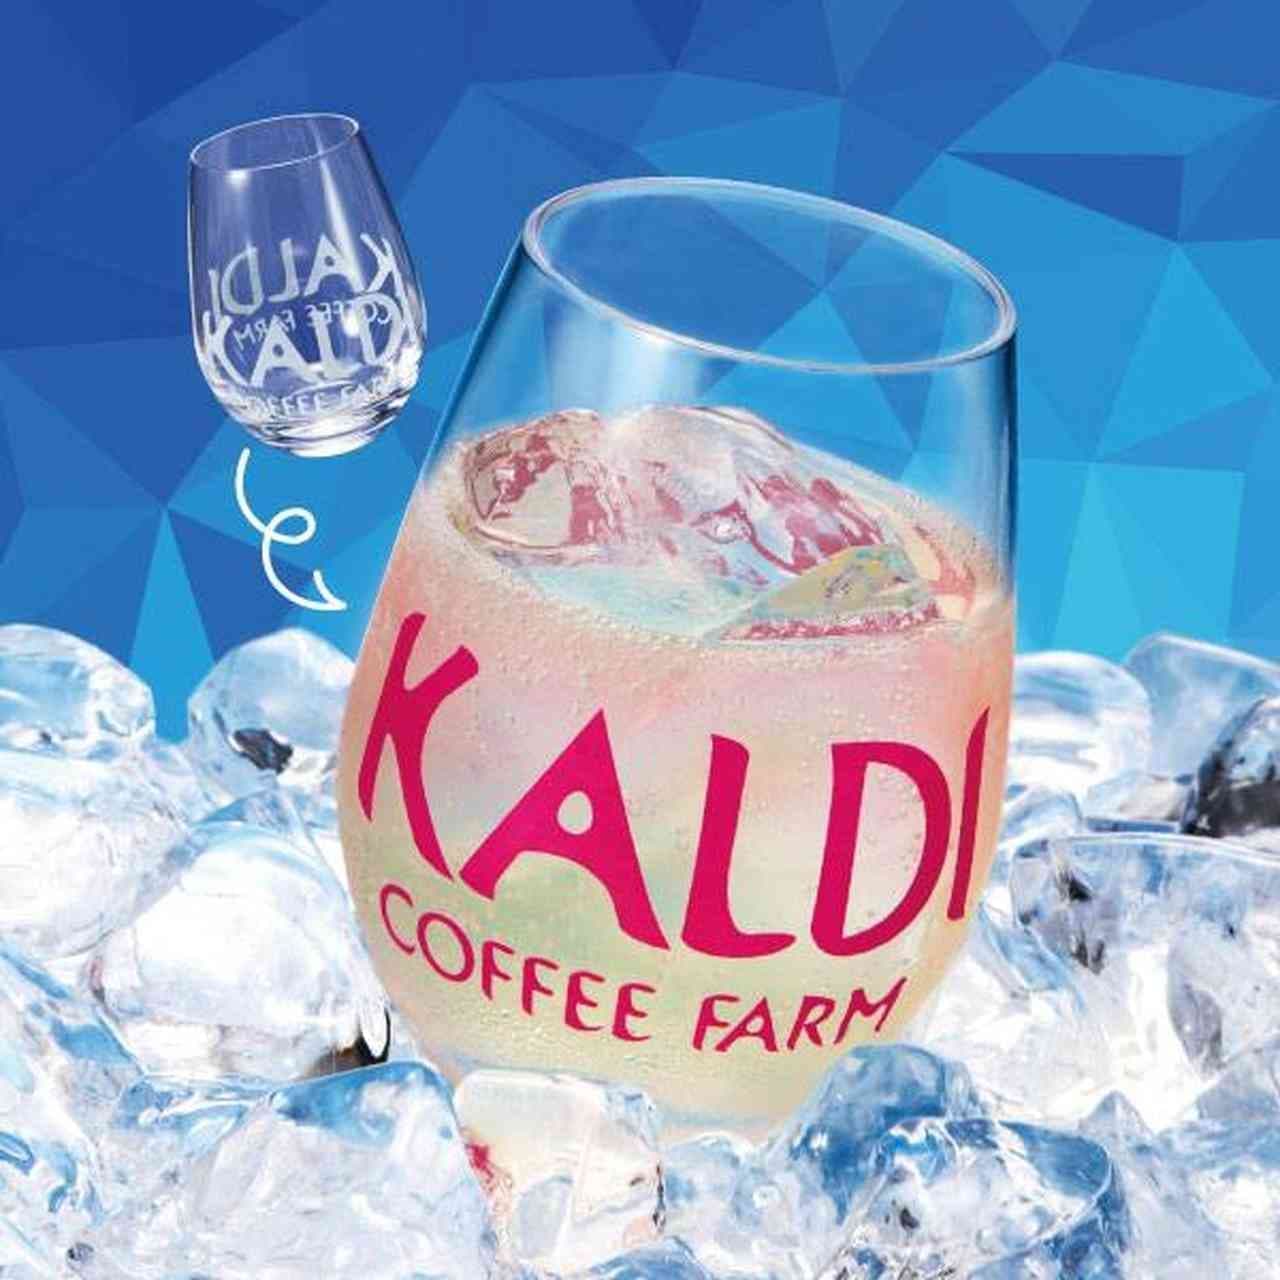 KALDI "Cava Poema Ice (white and sparkling wine)" purchase and receive a free wine glass